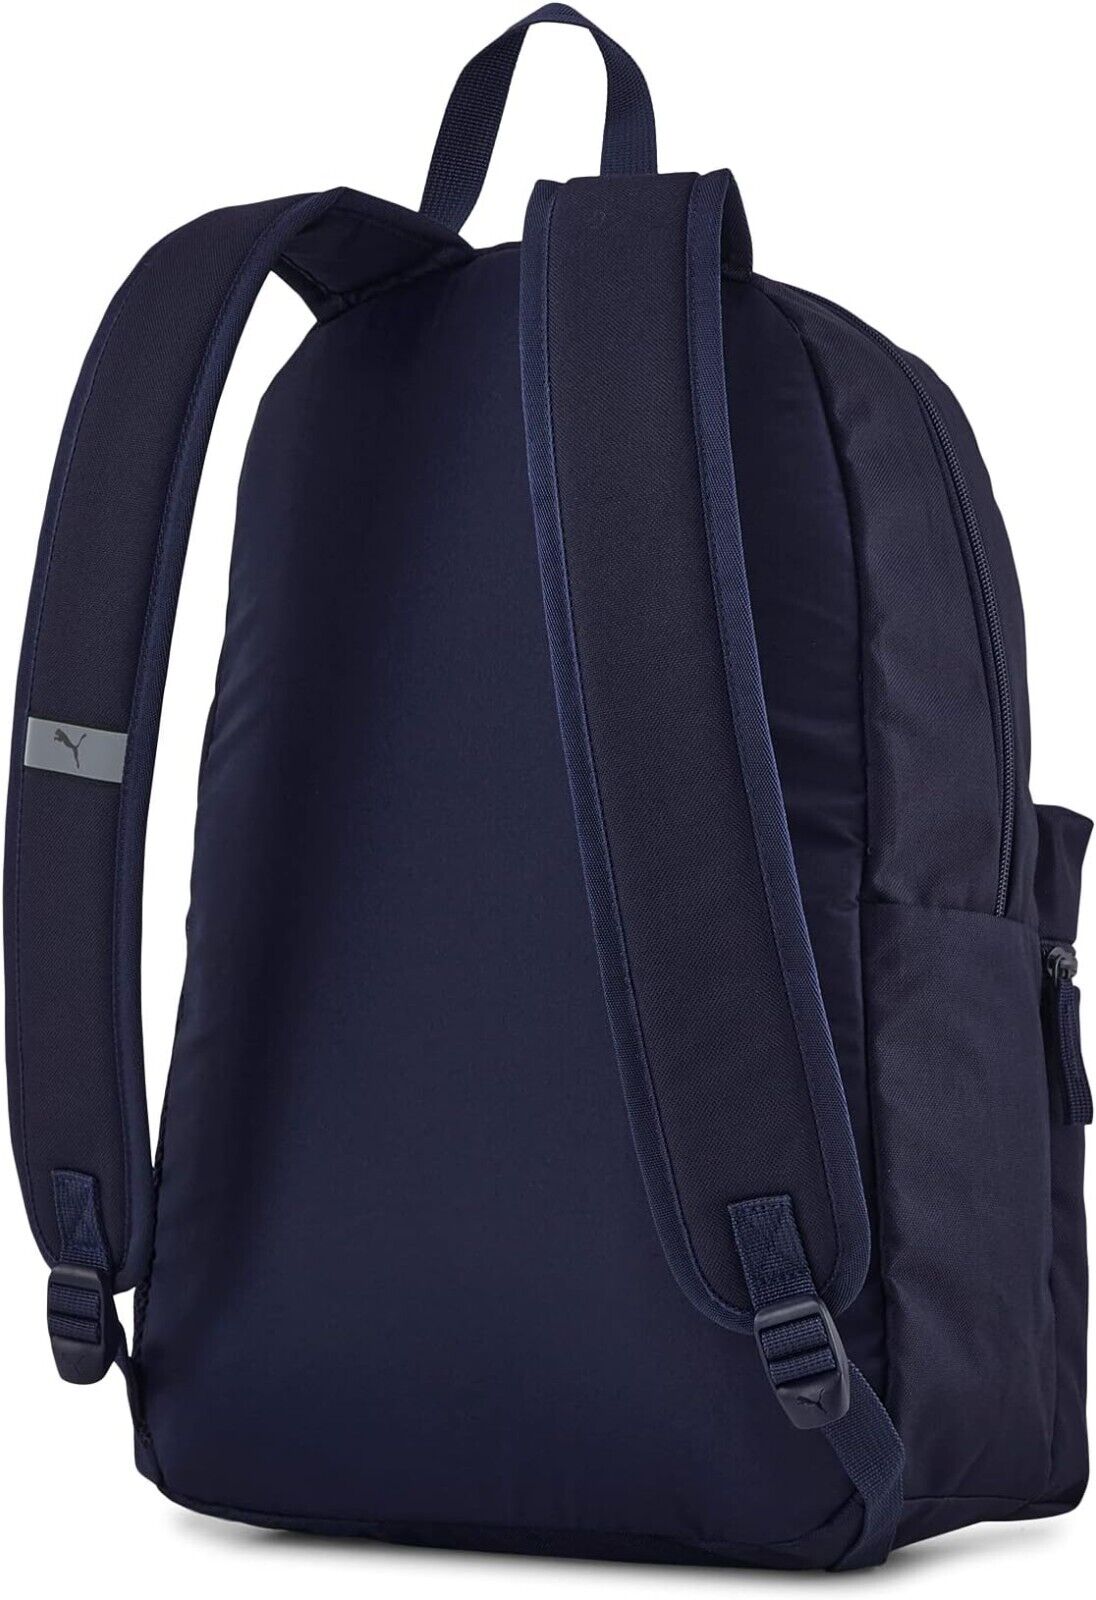 PUMA 75487 Unisex-Adult Phase Backpack Rucksack Herren Marineblau NEU